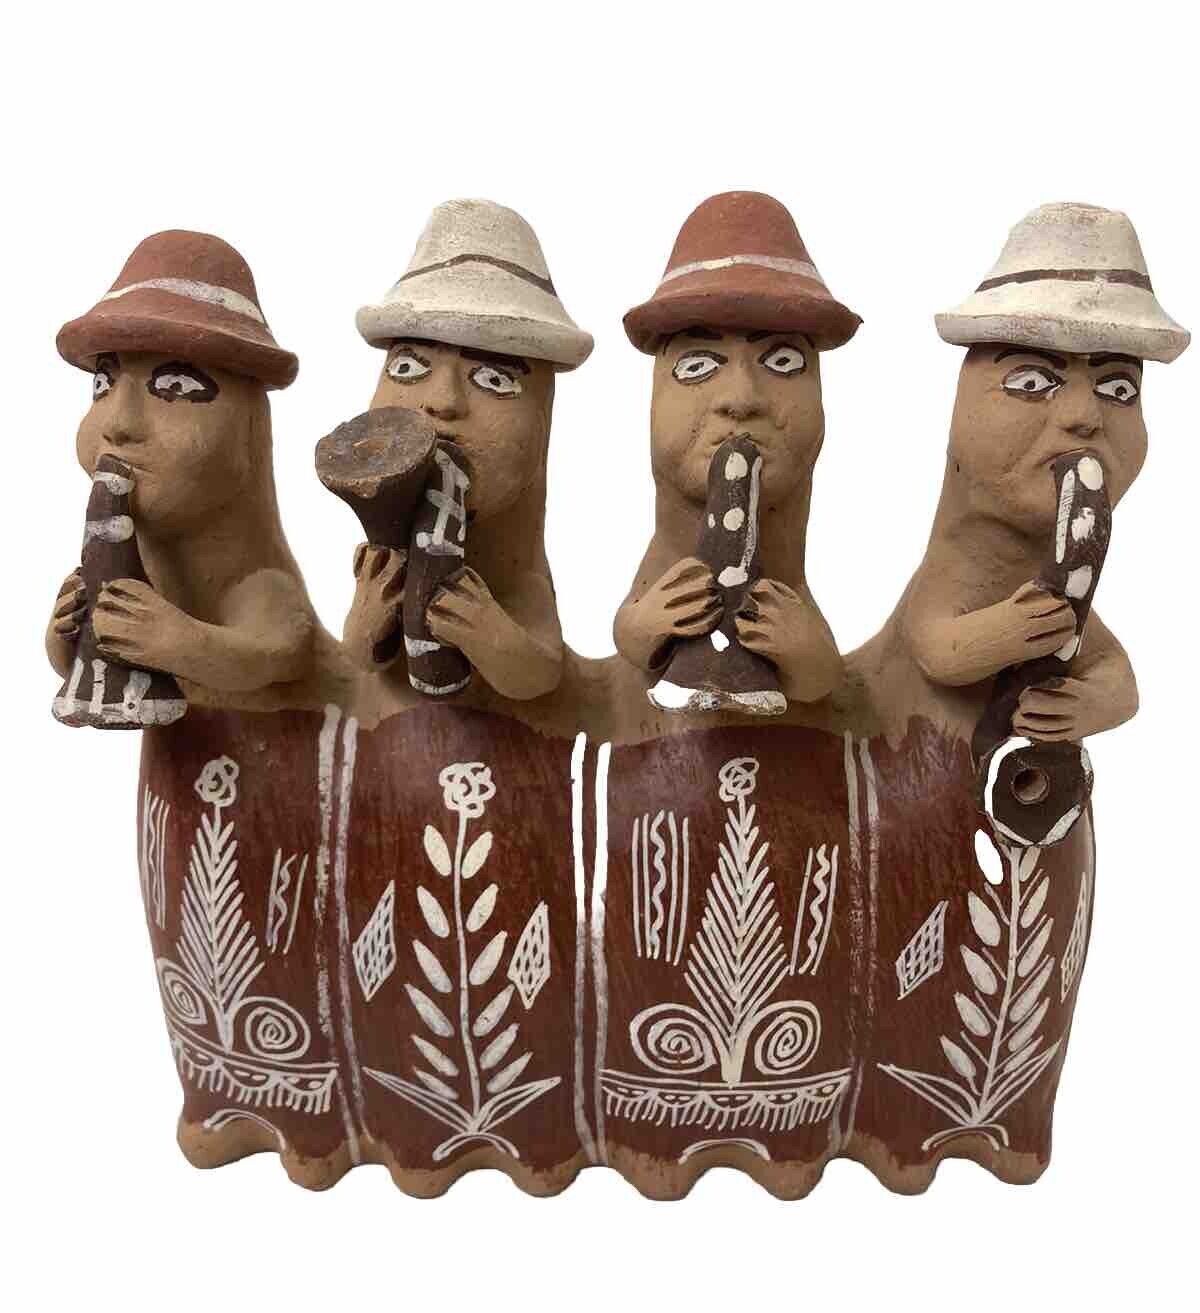 Peruvian Terra Cotta Clay Folk Art Figurine Band Flute Handcrafted Hand Painted